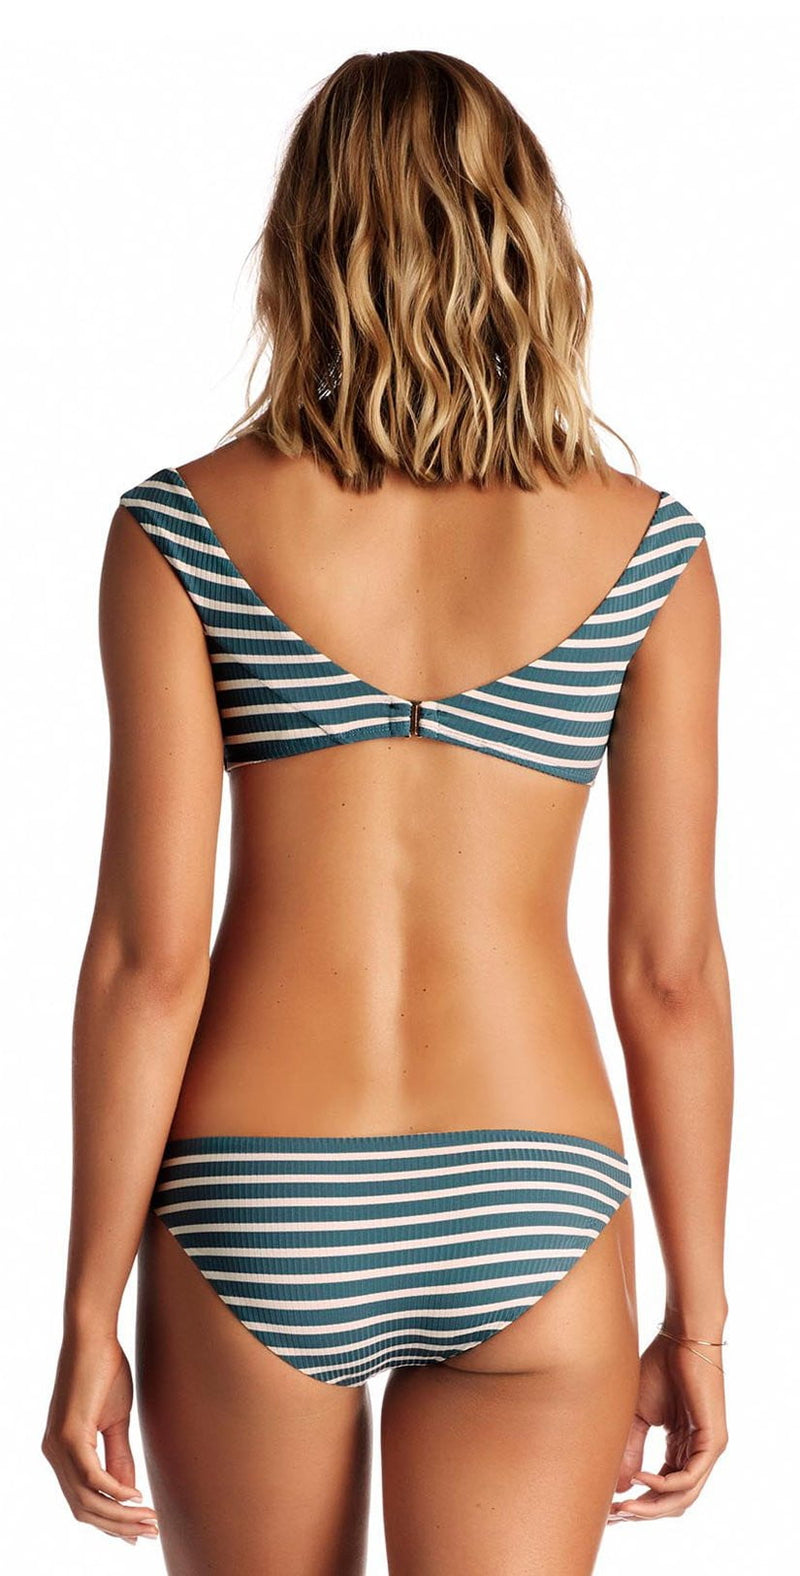 Vitamin A Capri Bikini Top in Grey Marin Stripe 88T MAG: